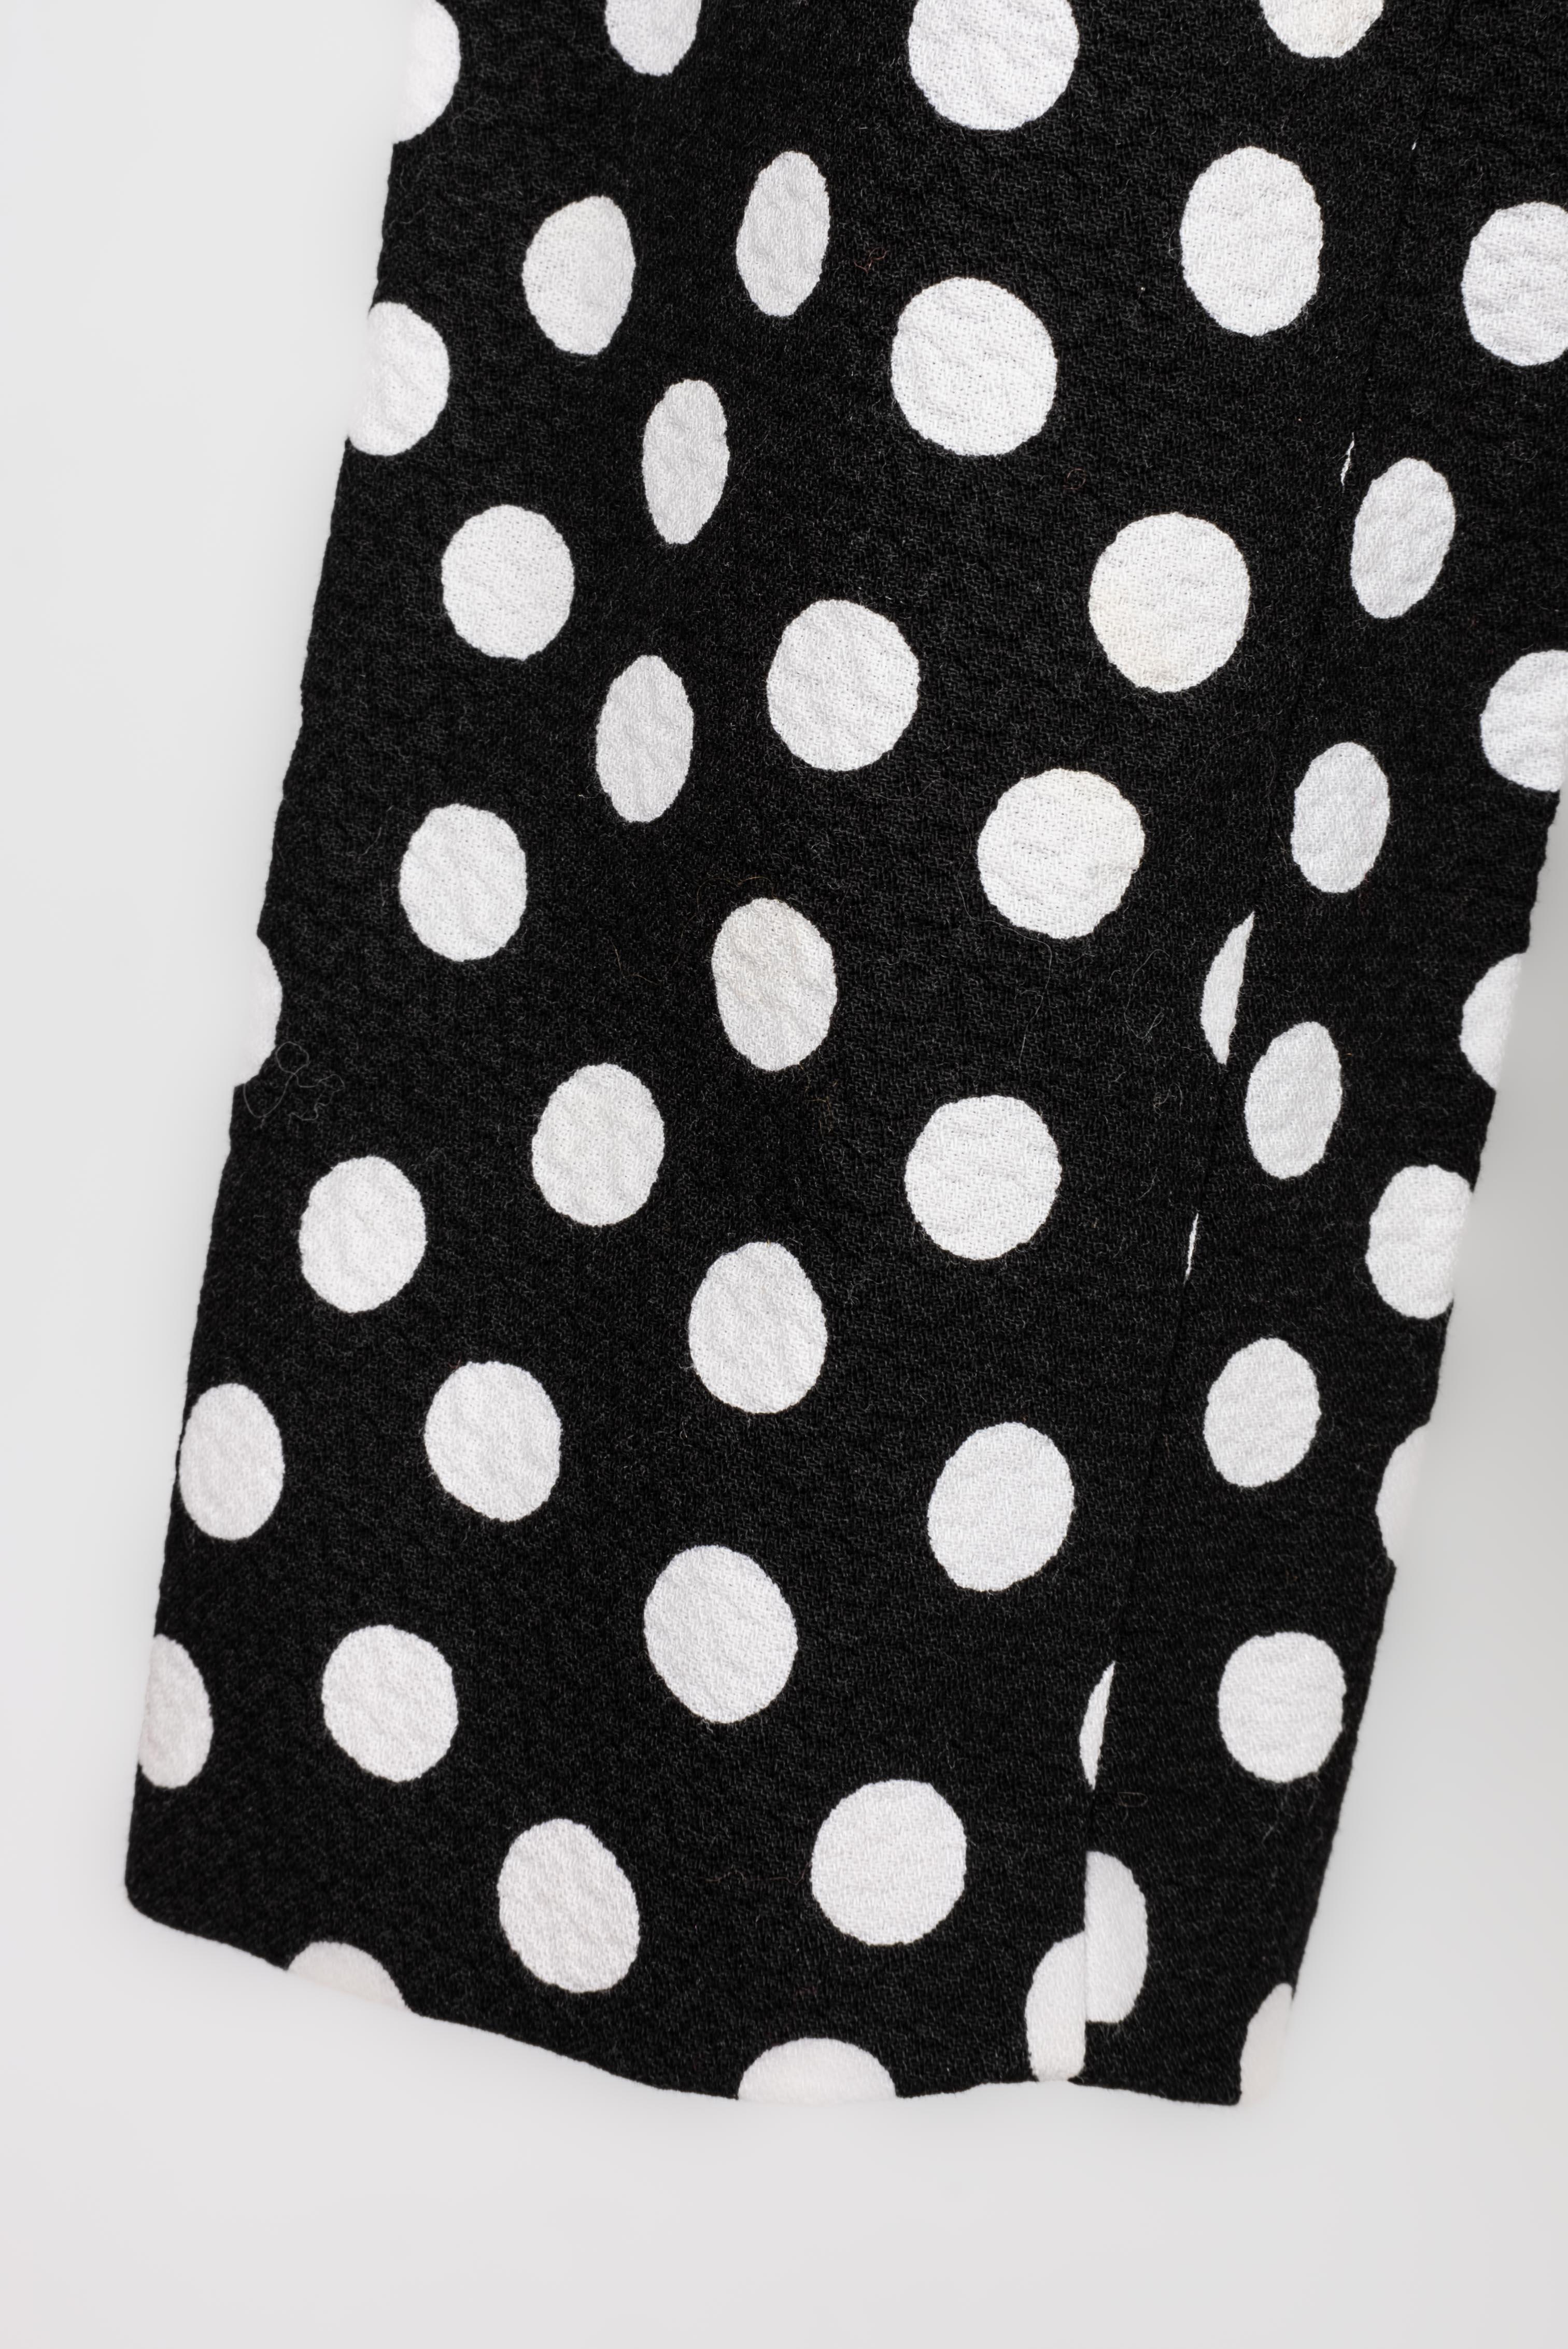 Yves Saint Laurent polka-dot jacket  For Sale 1